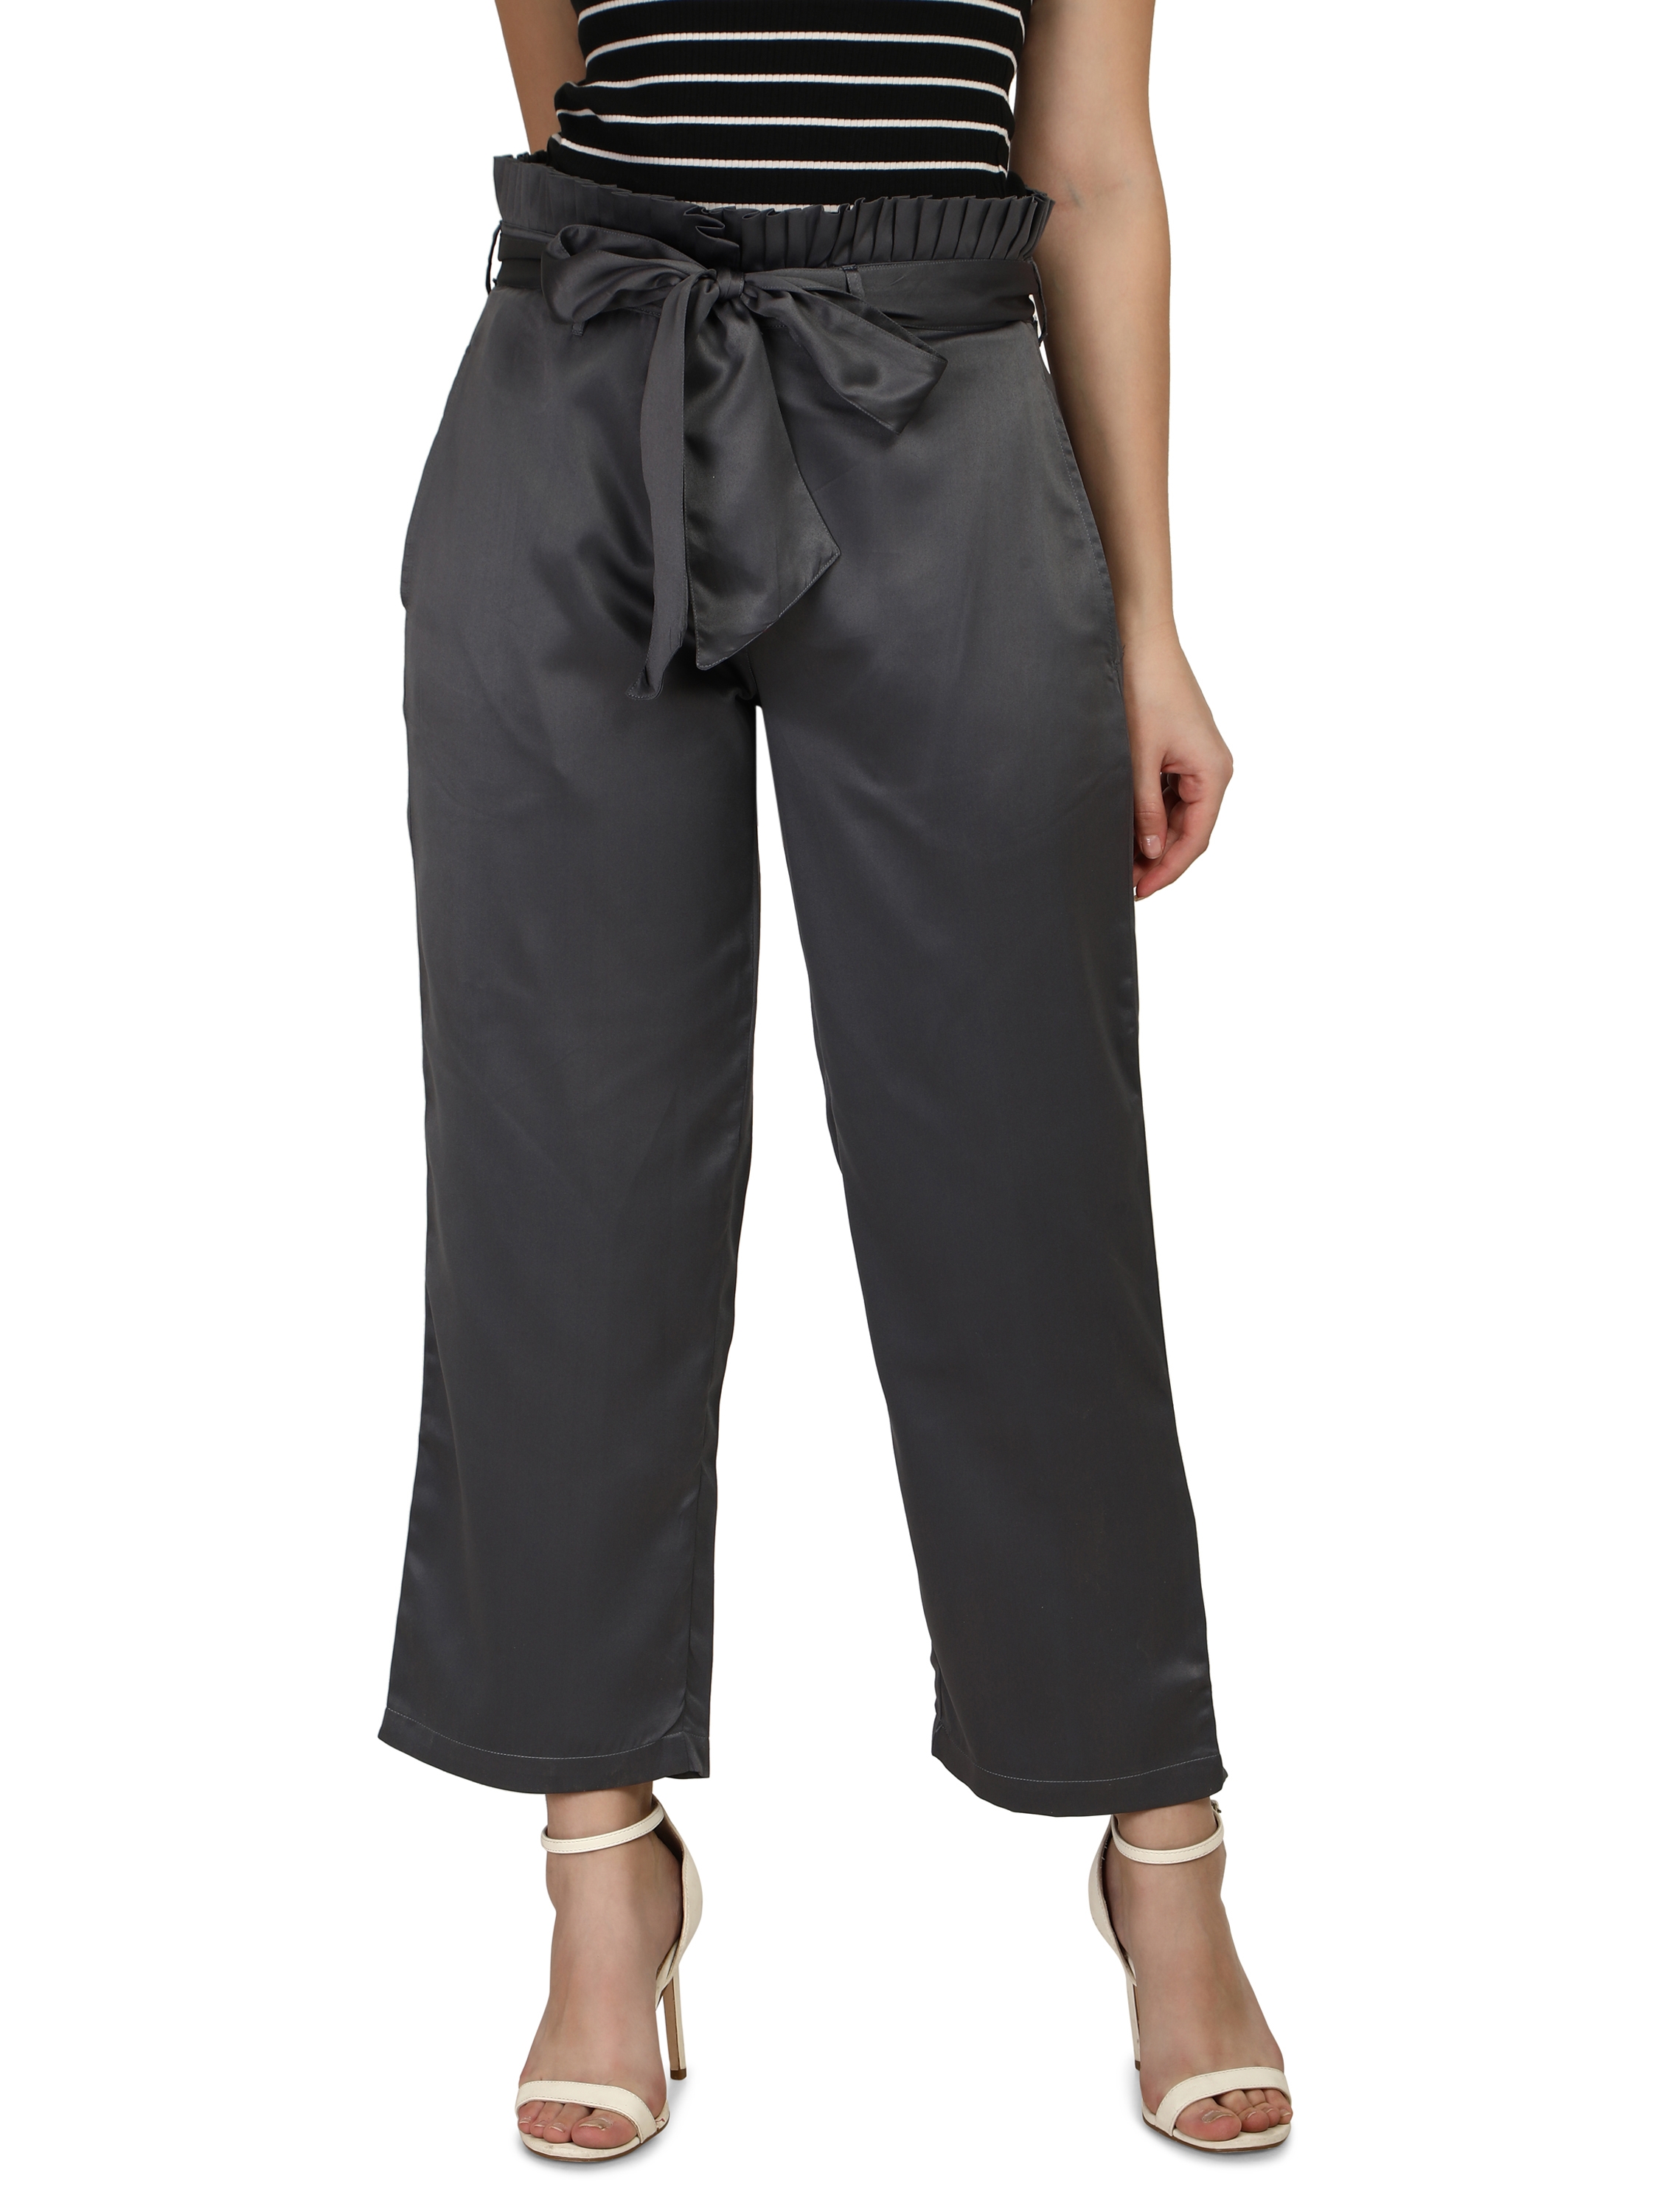 Lb 7belua Smarty Pants womens silk satin charcoal grey color frill waist tie up belt trouser.